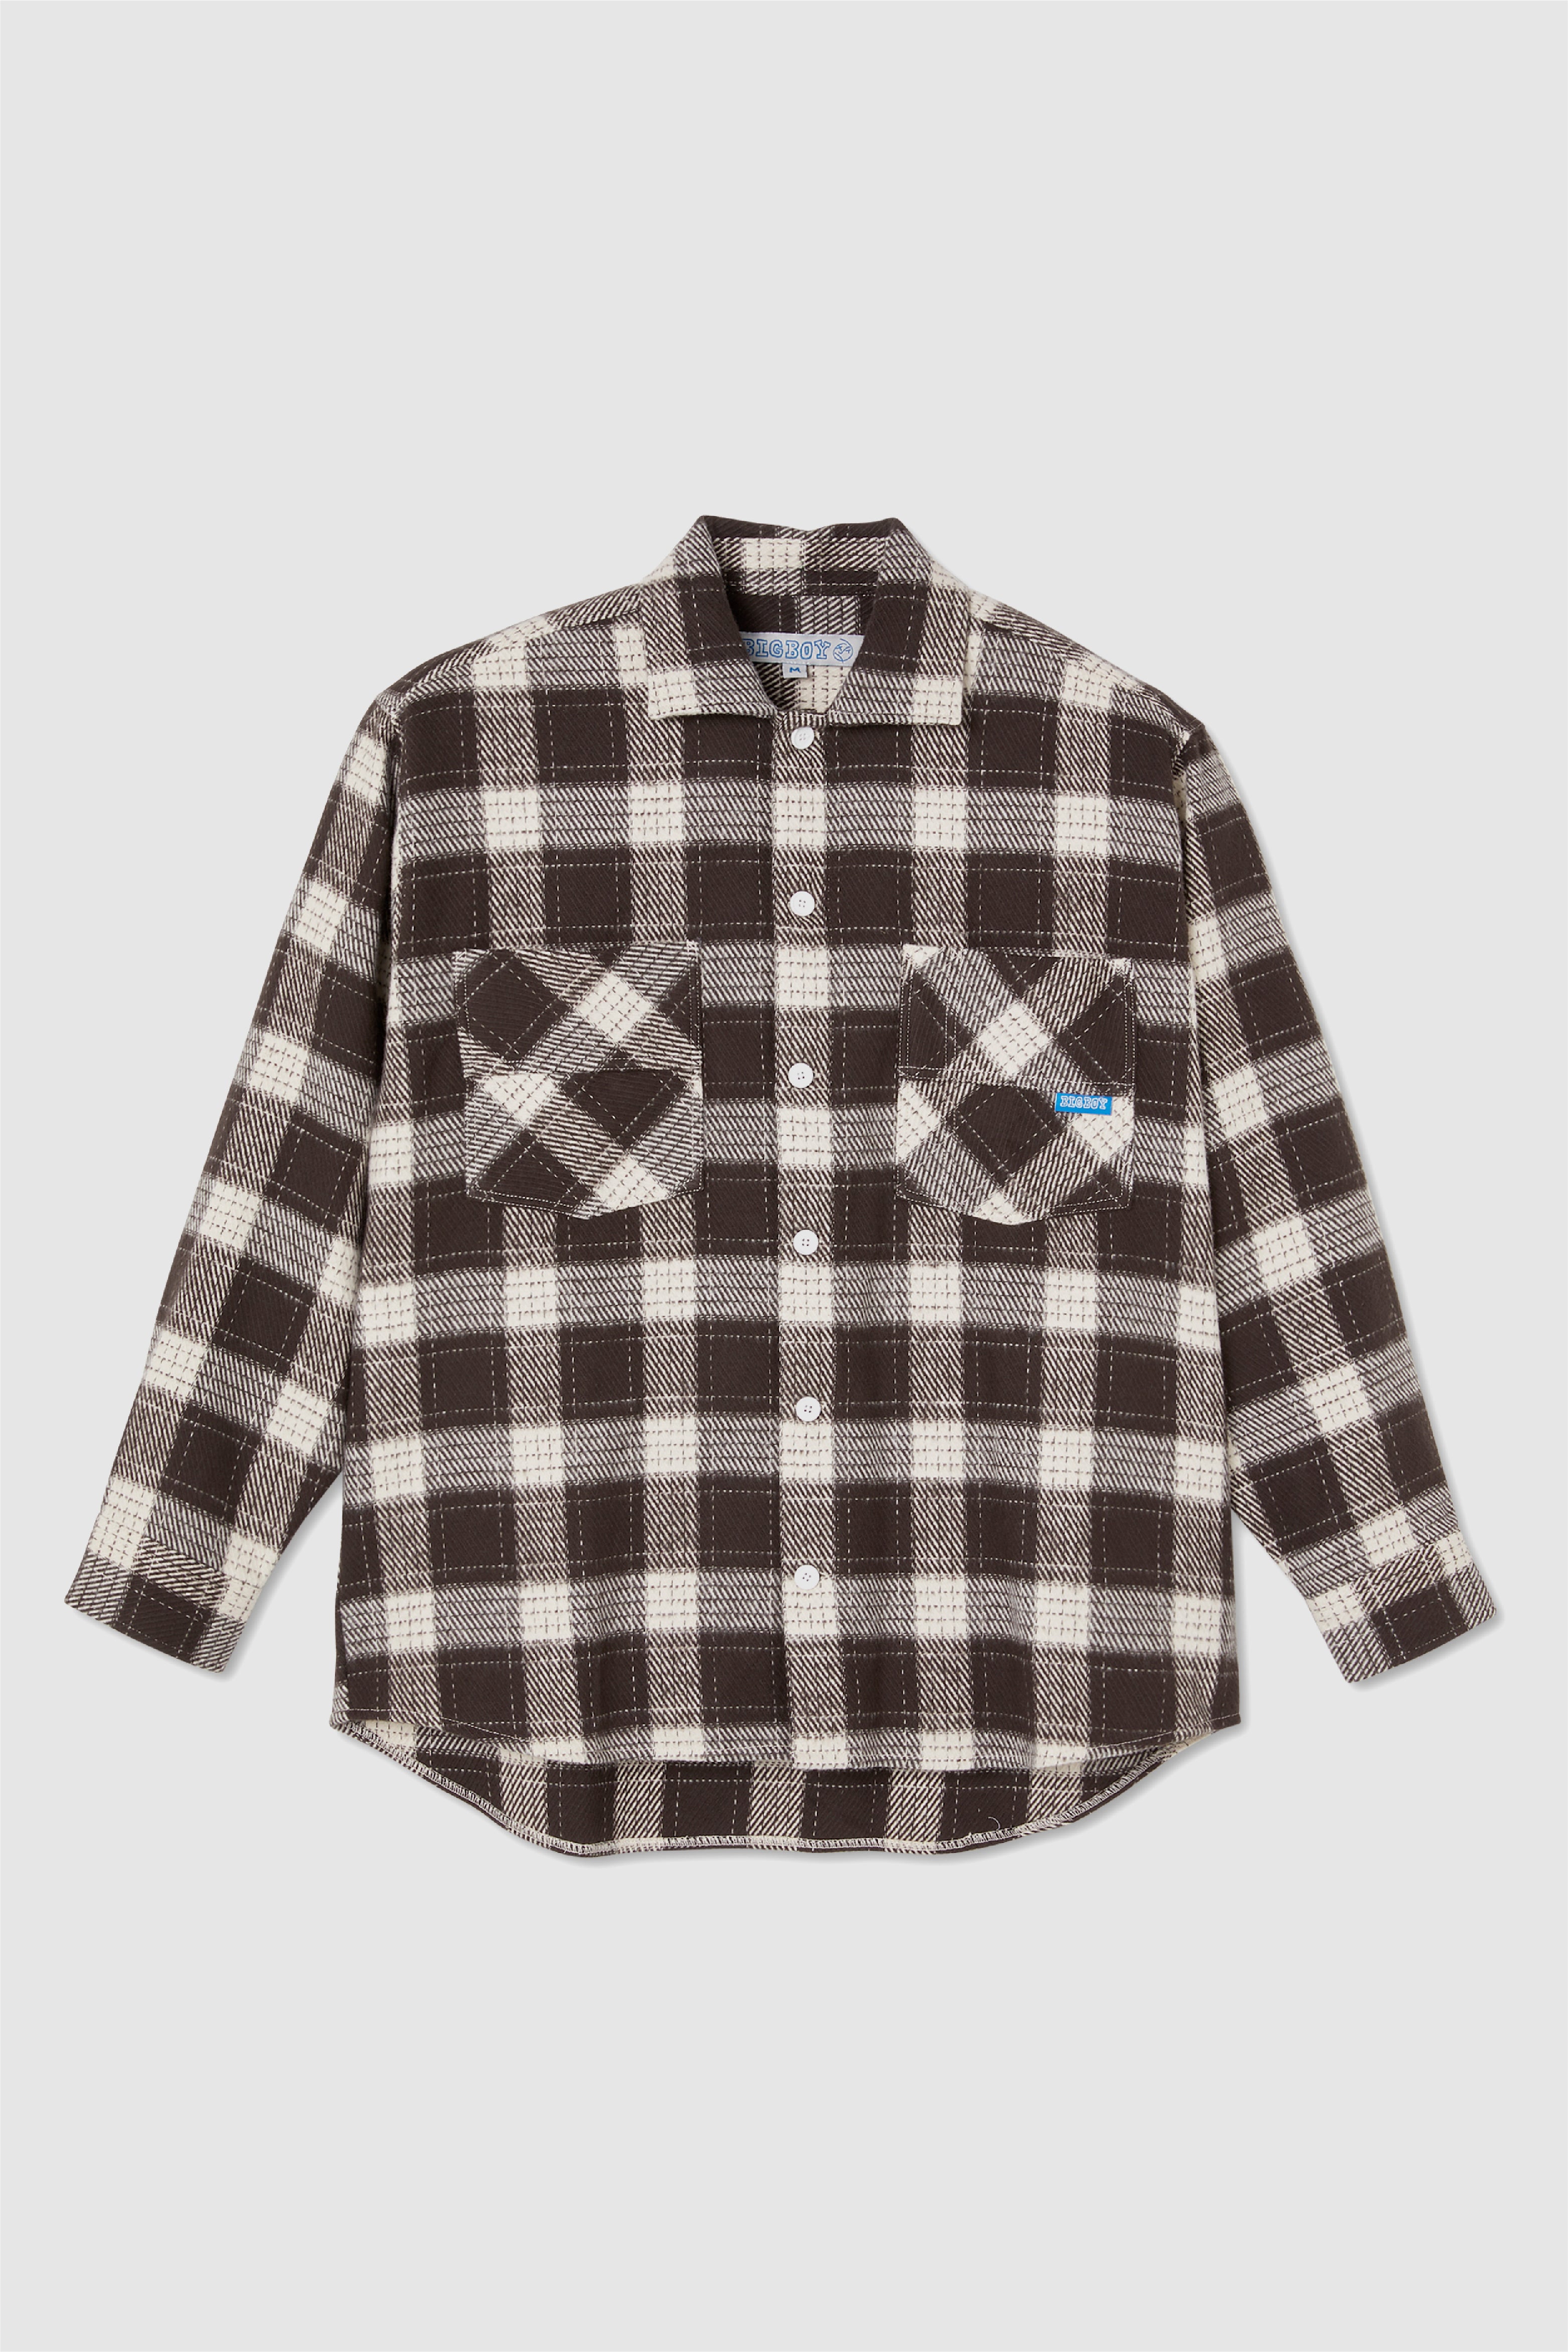 Selectshop FRAME - POLAR SKATE CO. Big Boy Flannel Shirt Shirts Dubai